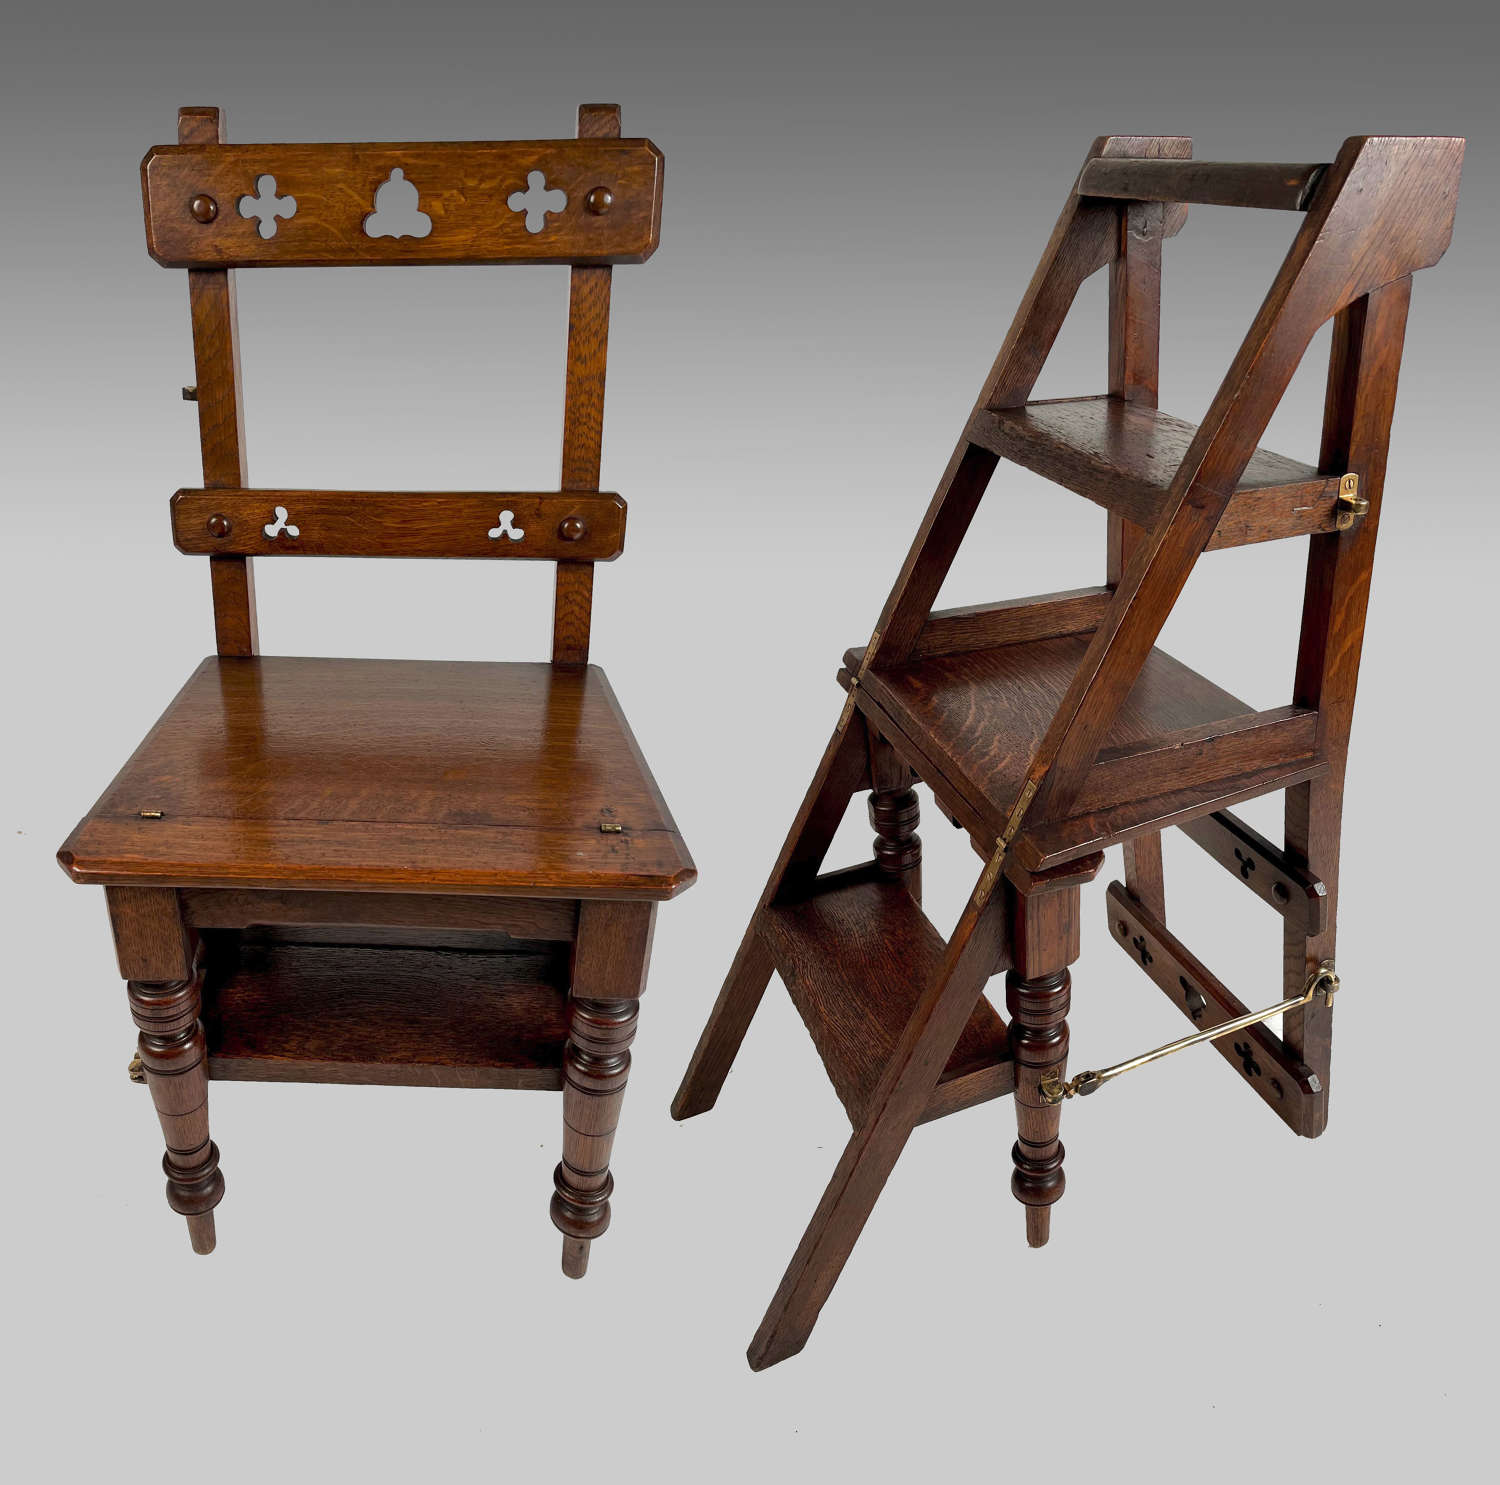 19th century oak chair steps